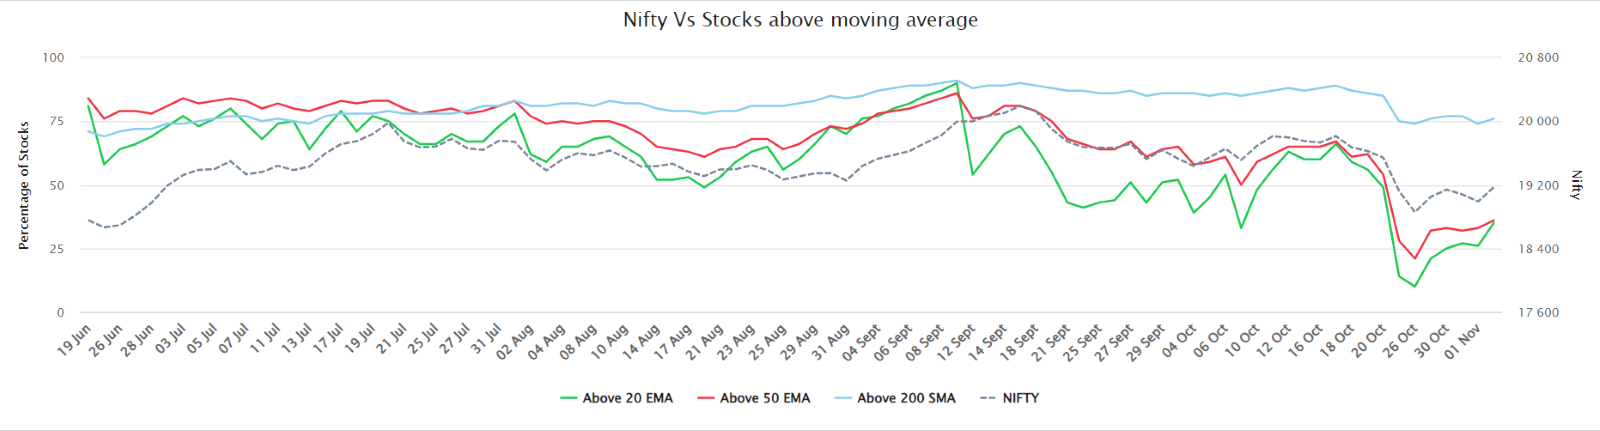 Nifty VS Stocks